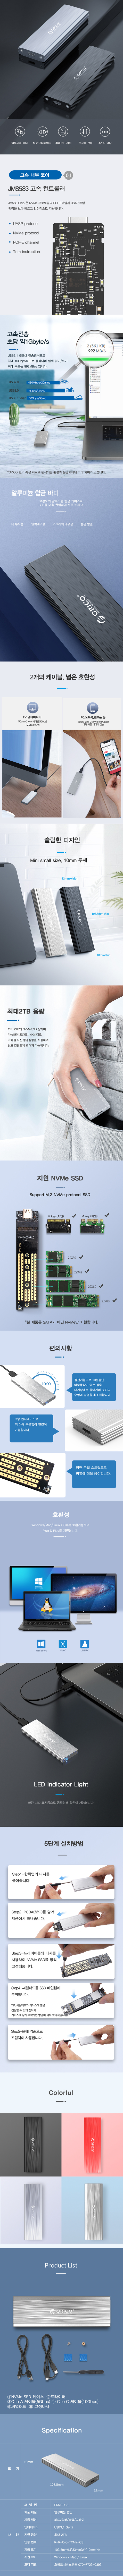  ORICO NVMe M.2 USB3.1 2TB Gen2 케이블 포함 PRM2-C3  58,900원 - (주)삼양국제무역 디지털, PC저장장치, SSD, M.2 NVMe 바보사랑  ORICO NVMe M.2 USB3.1 2TB Gen2 케이블 포함 PRM2-C3  58,900원 - (주)삼양국제무역 디지털, PC저장장치, SSD, M.2 NVMe 바보사랑